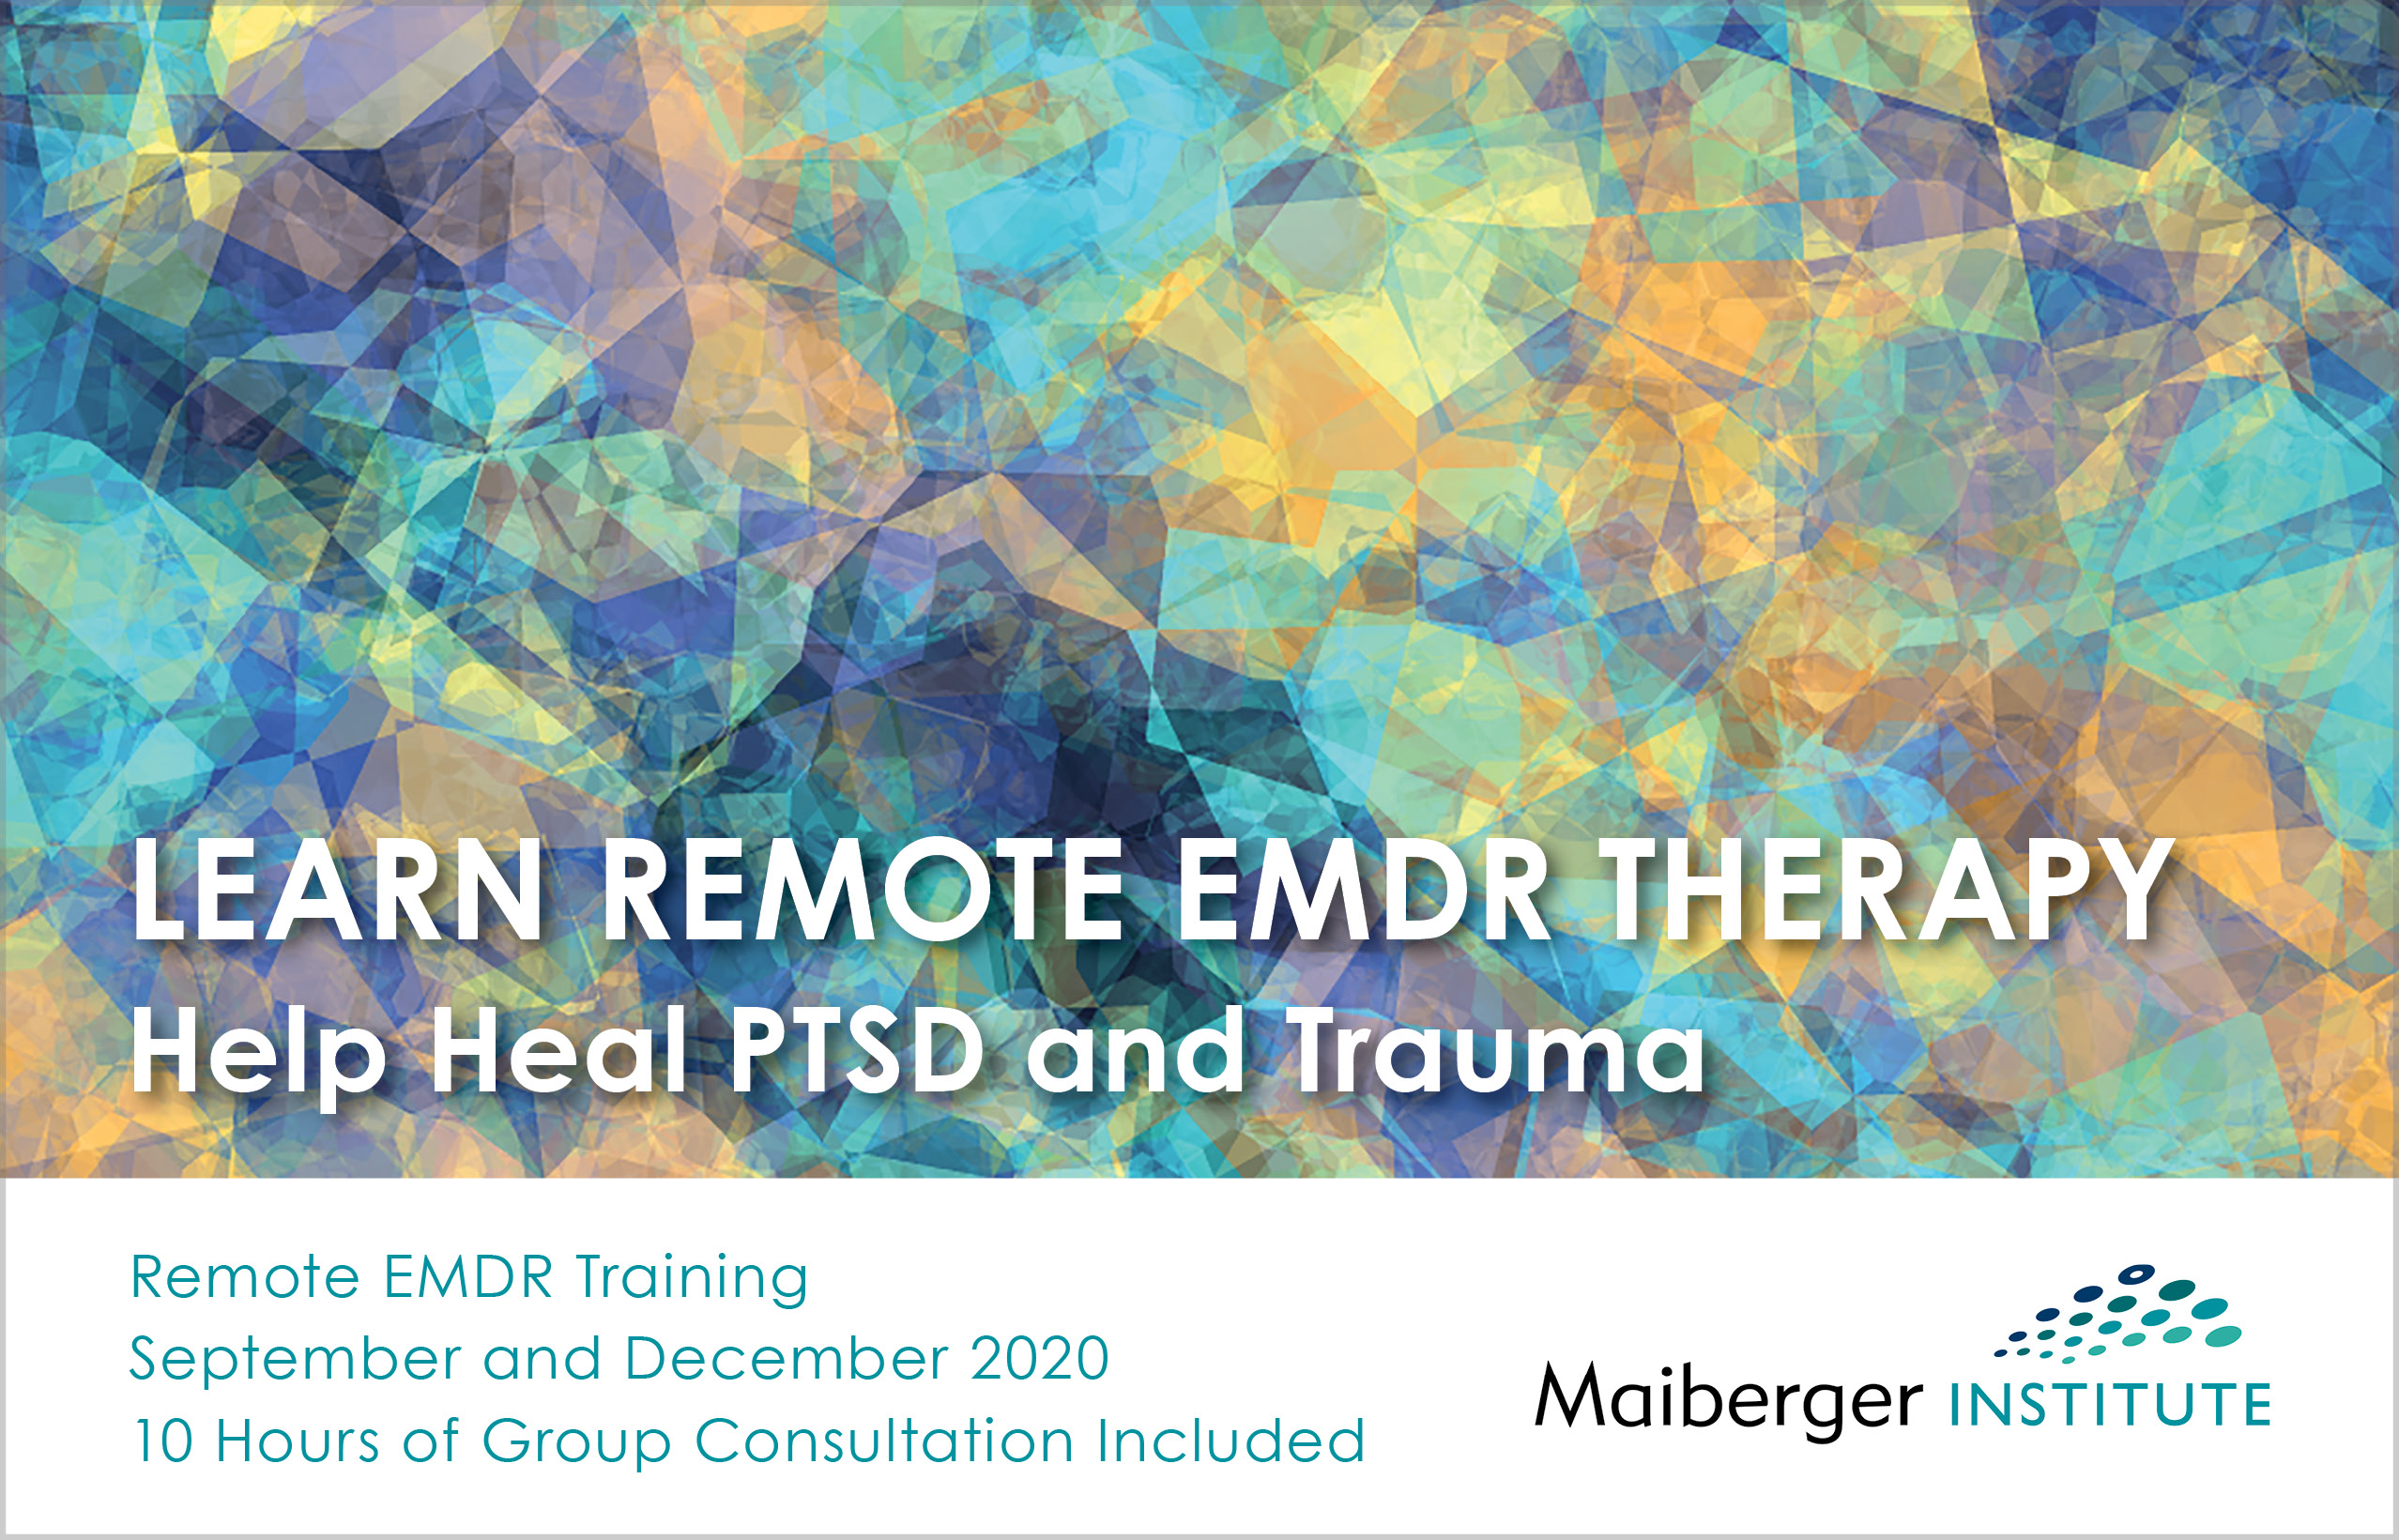 Remote EMDR Training - September and December 2020 - EMDR Training Schedule - Maiberger Institute